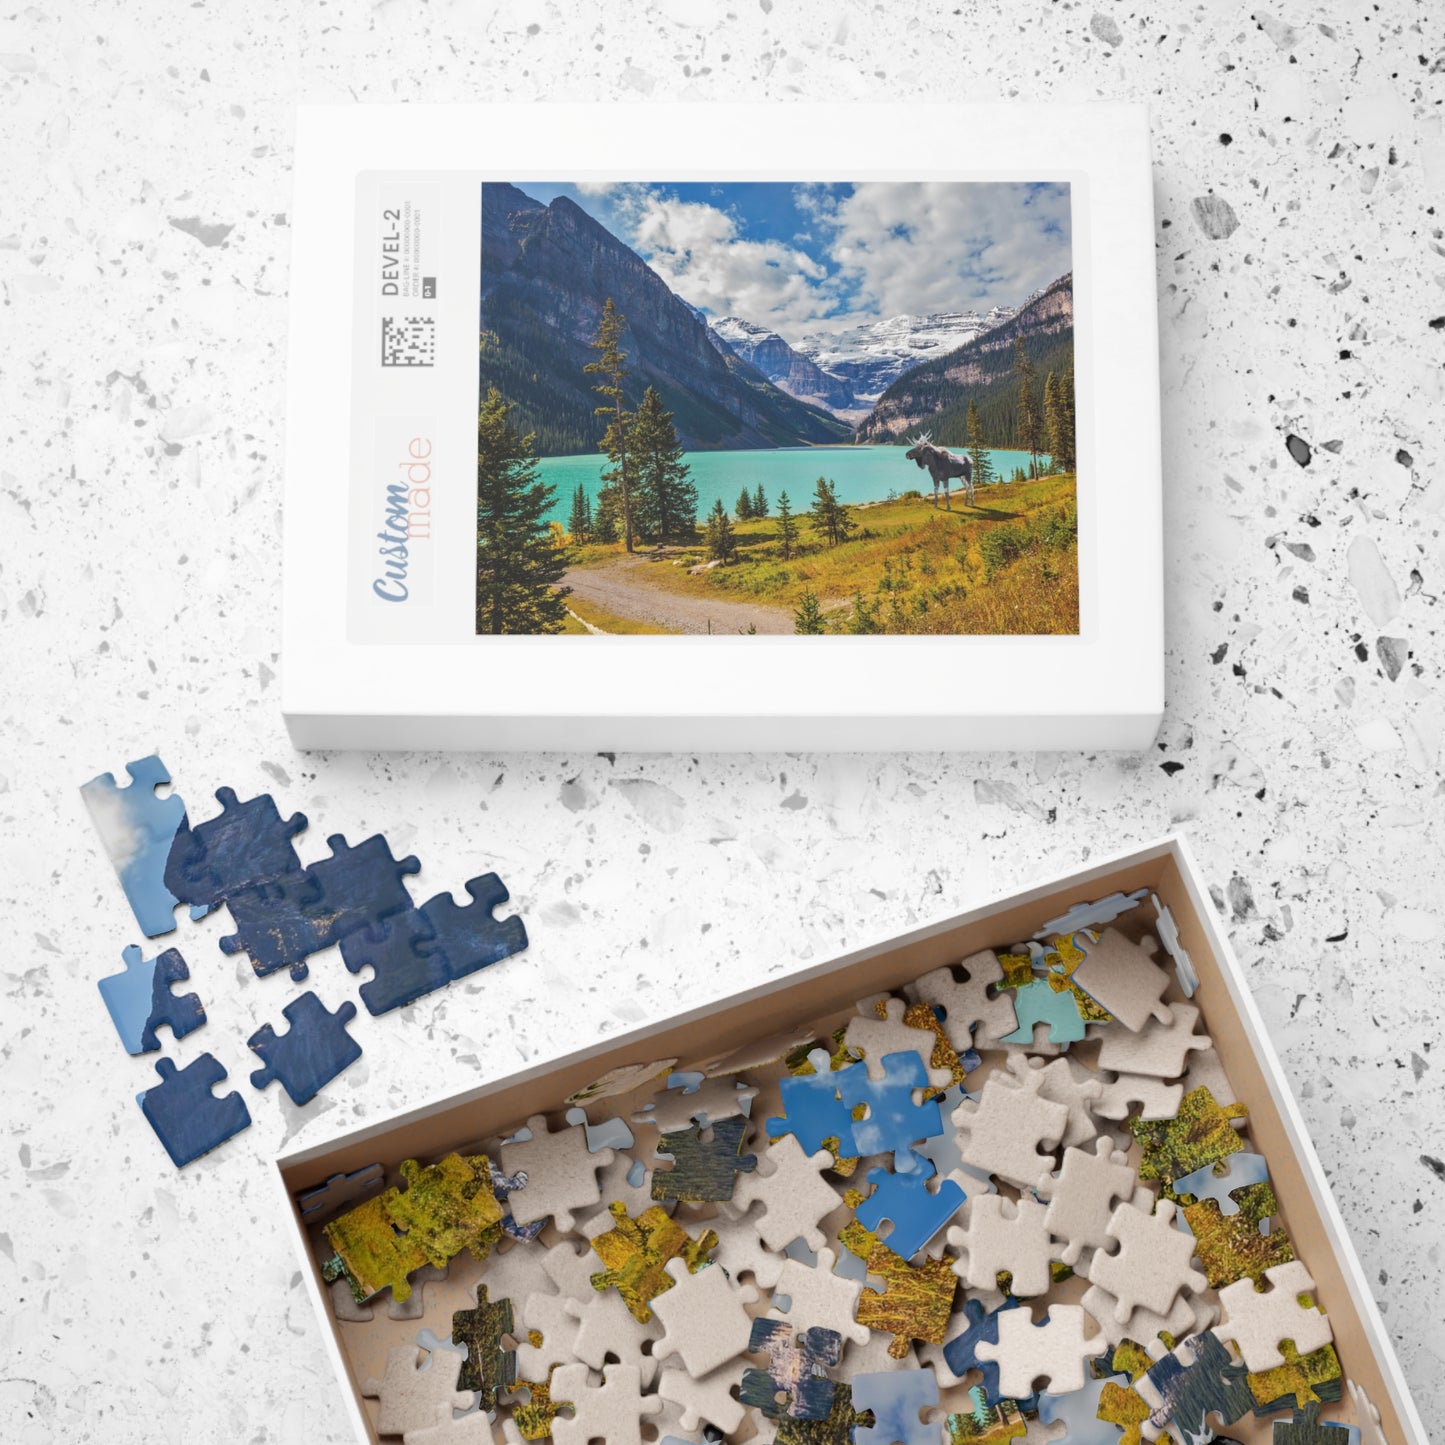 Banff Alberta Canadian Landscape Puzzle (110, 252, 500, 1014-piece)